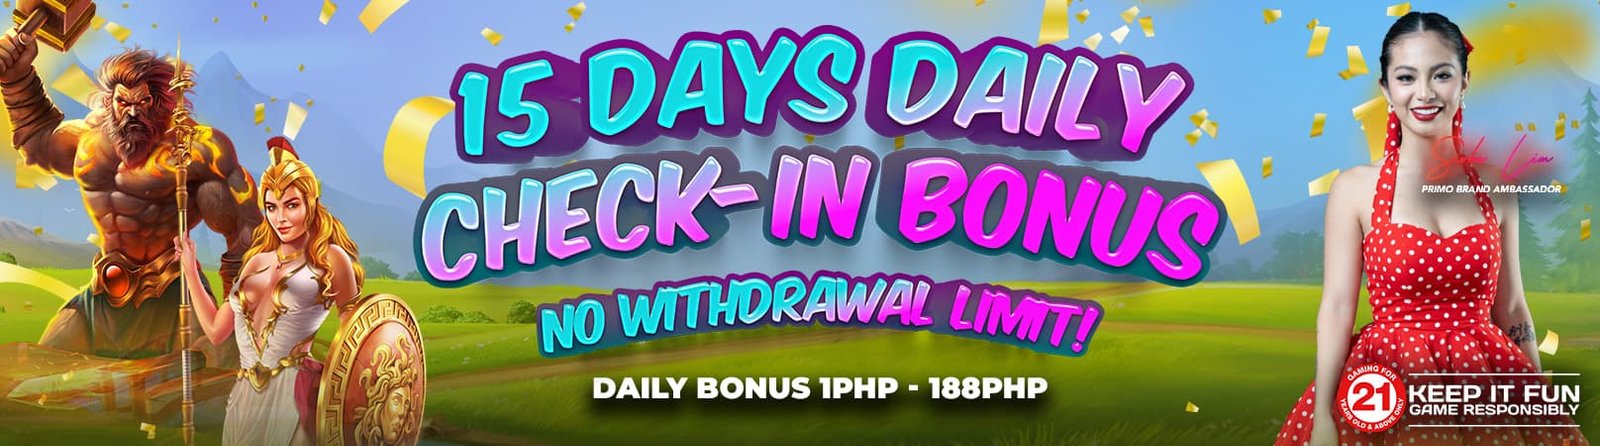 15 Days Daily Check-in Bonus